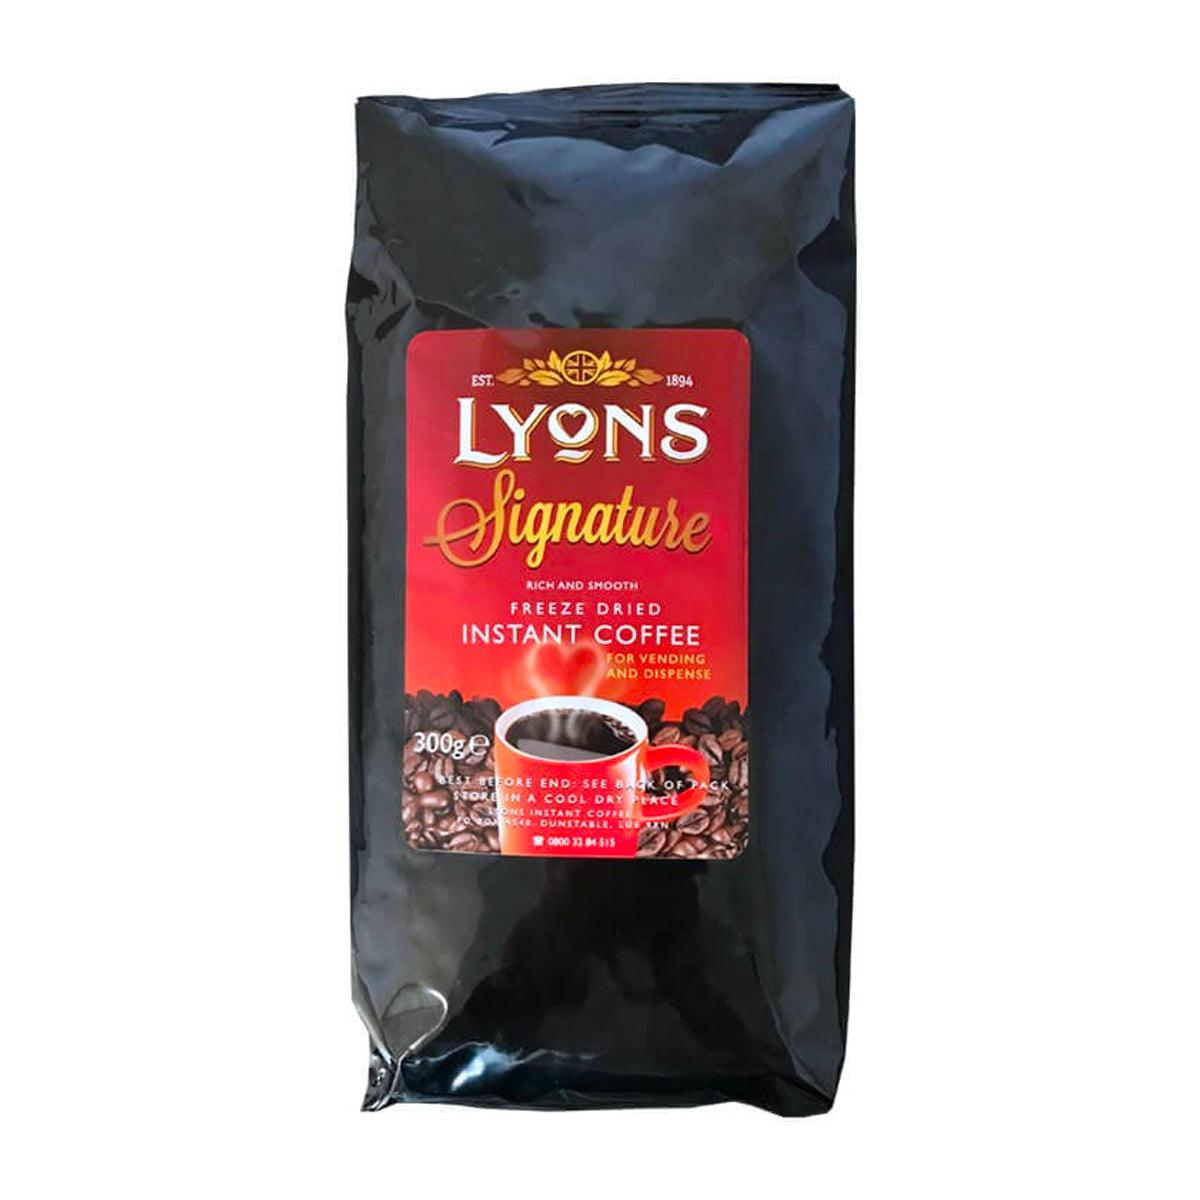 Lyons Signature Freezedried Vending Coffee - 300g Bag - Vending Superstore